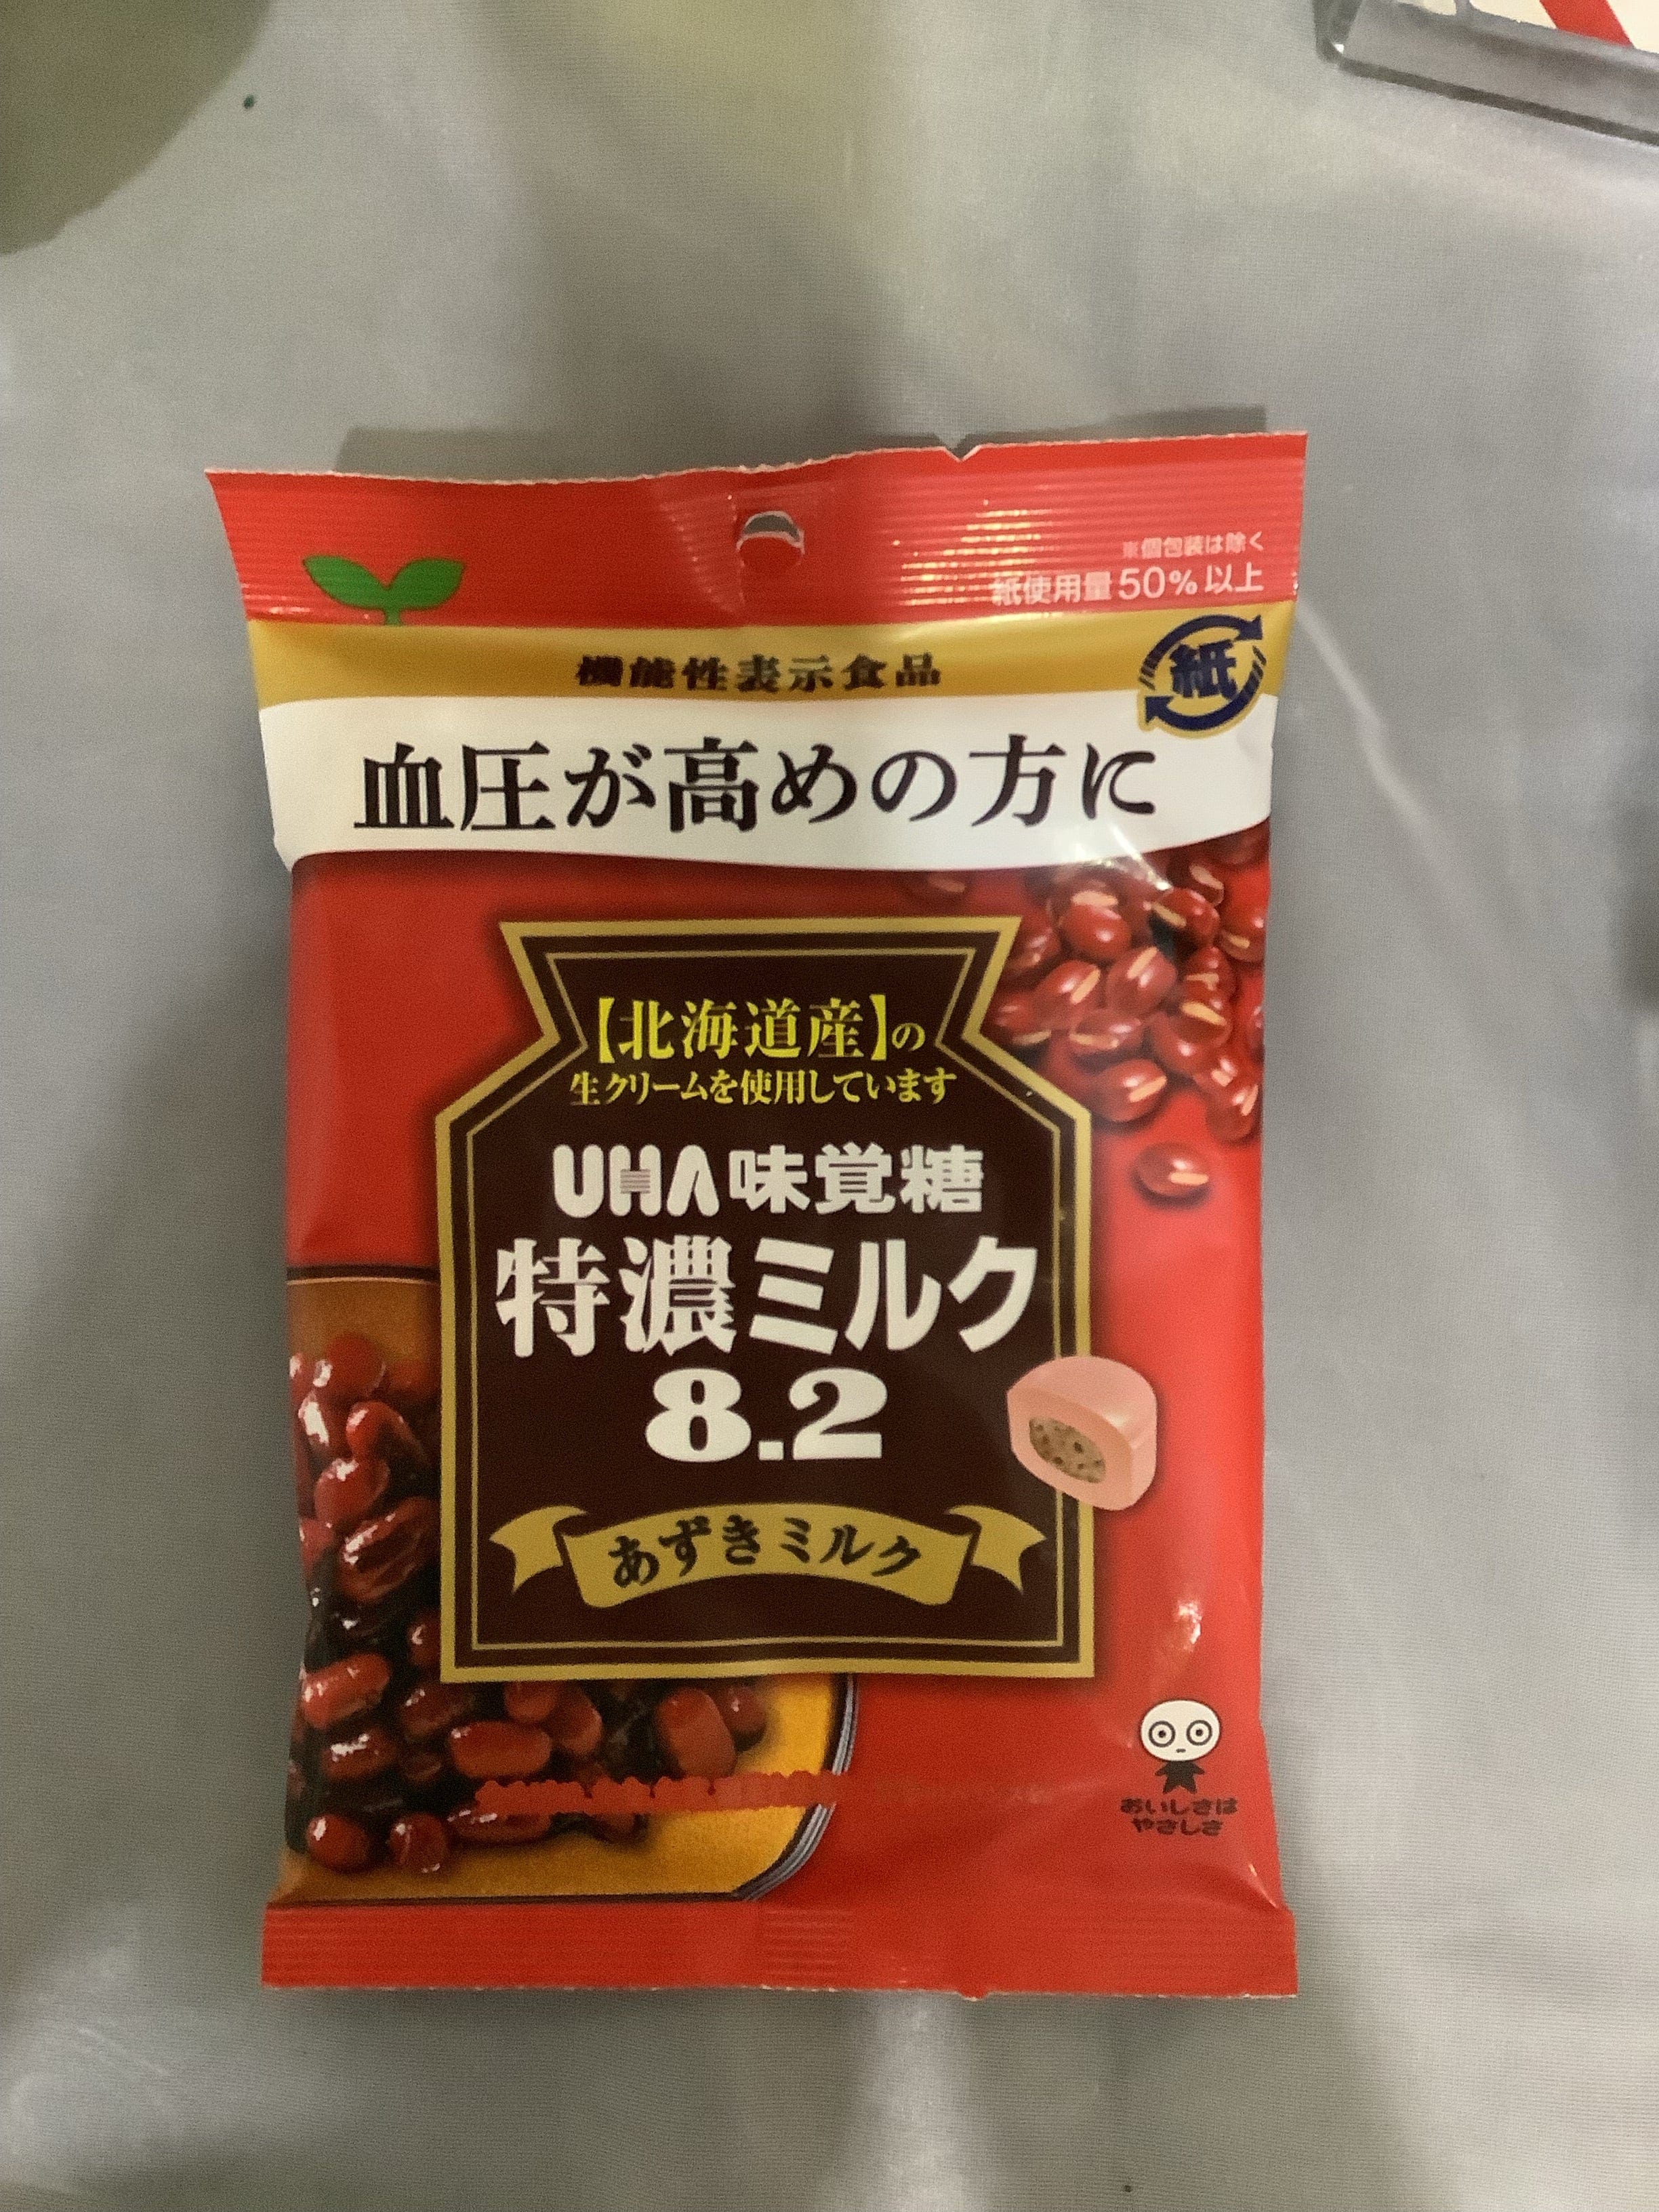 Daiei UHA Tokuno Redbean MK Candy Kawaii Gifts 4902750865037